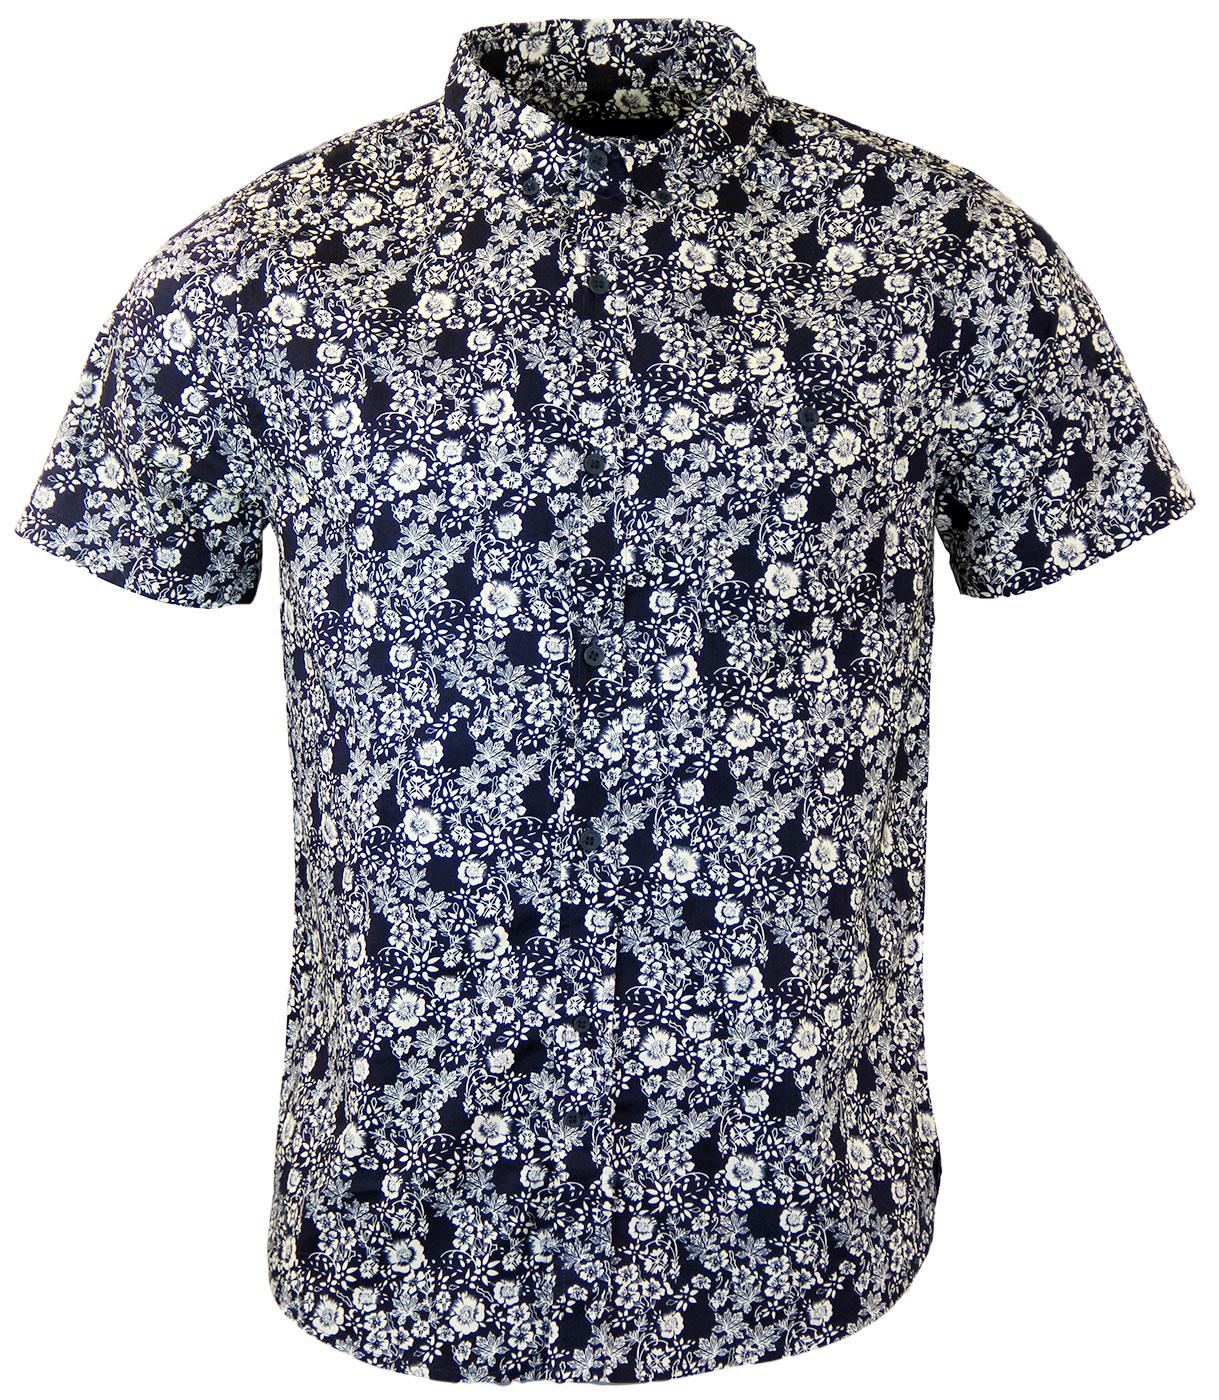 NATIVE YOUTH Retro Mod Floral Short Sleeve Shirt 